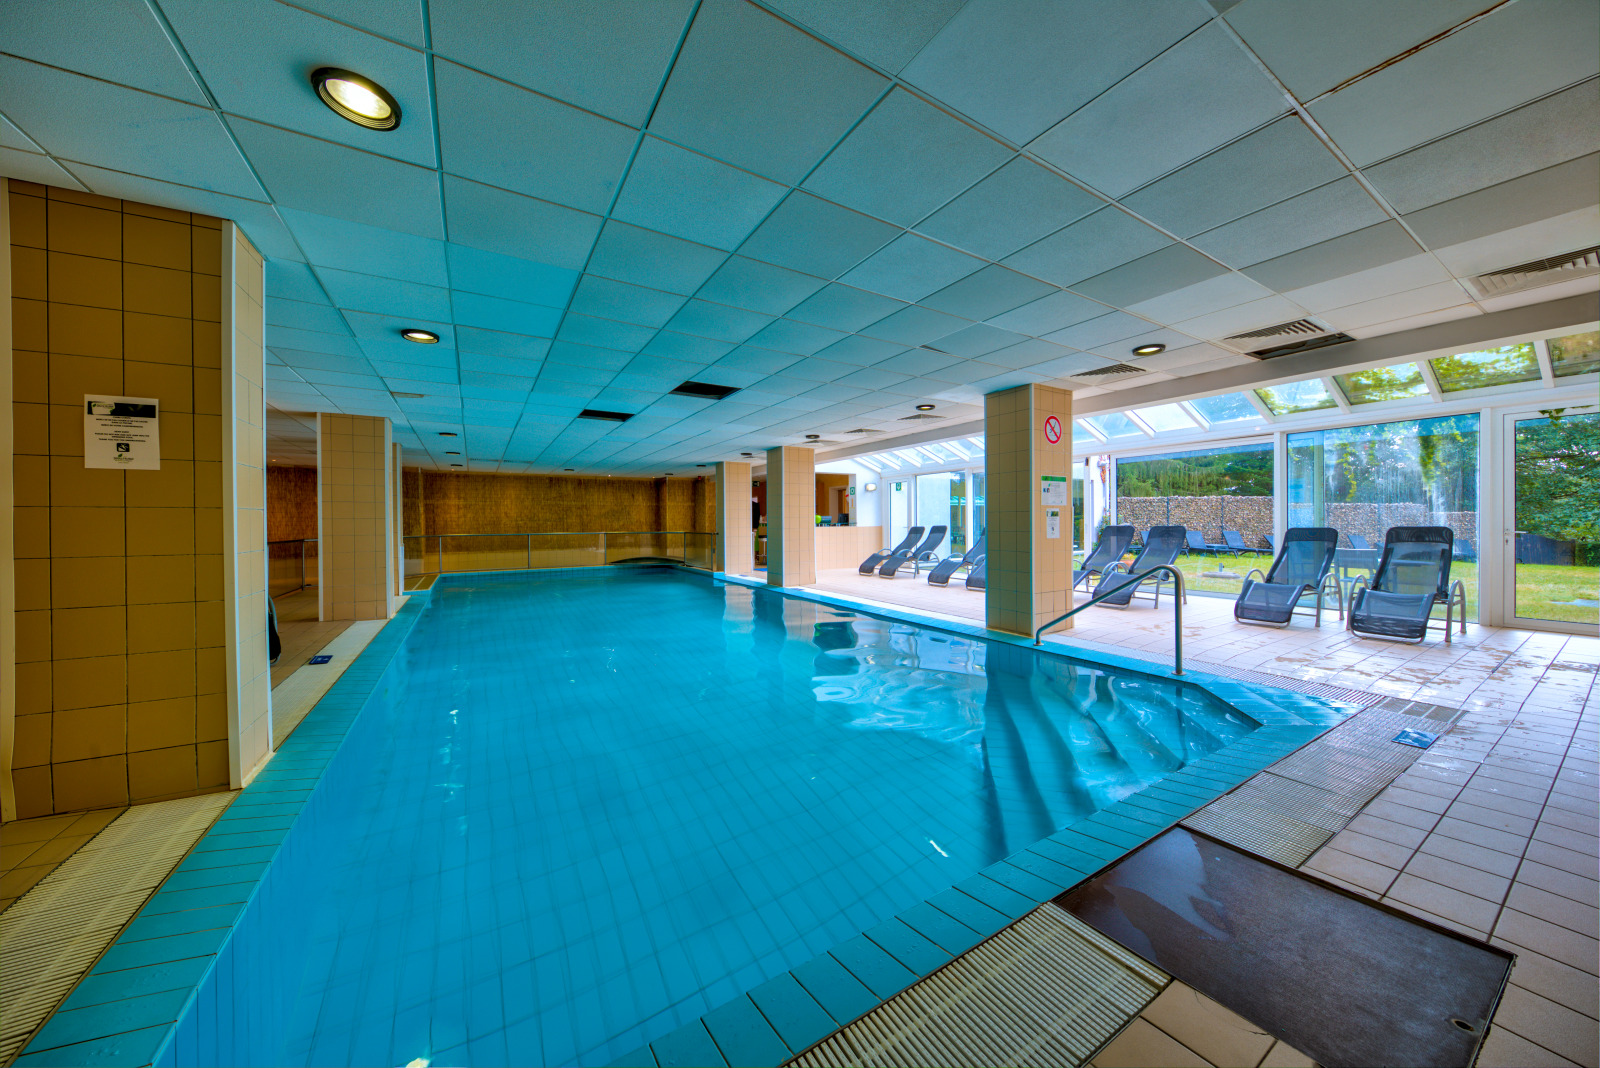 Swimming pool of the Silva Spa-Balmoral Hotel in Spa